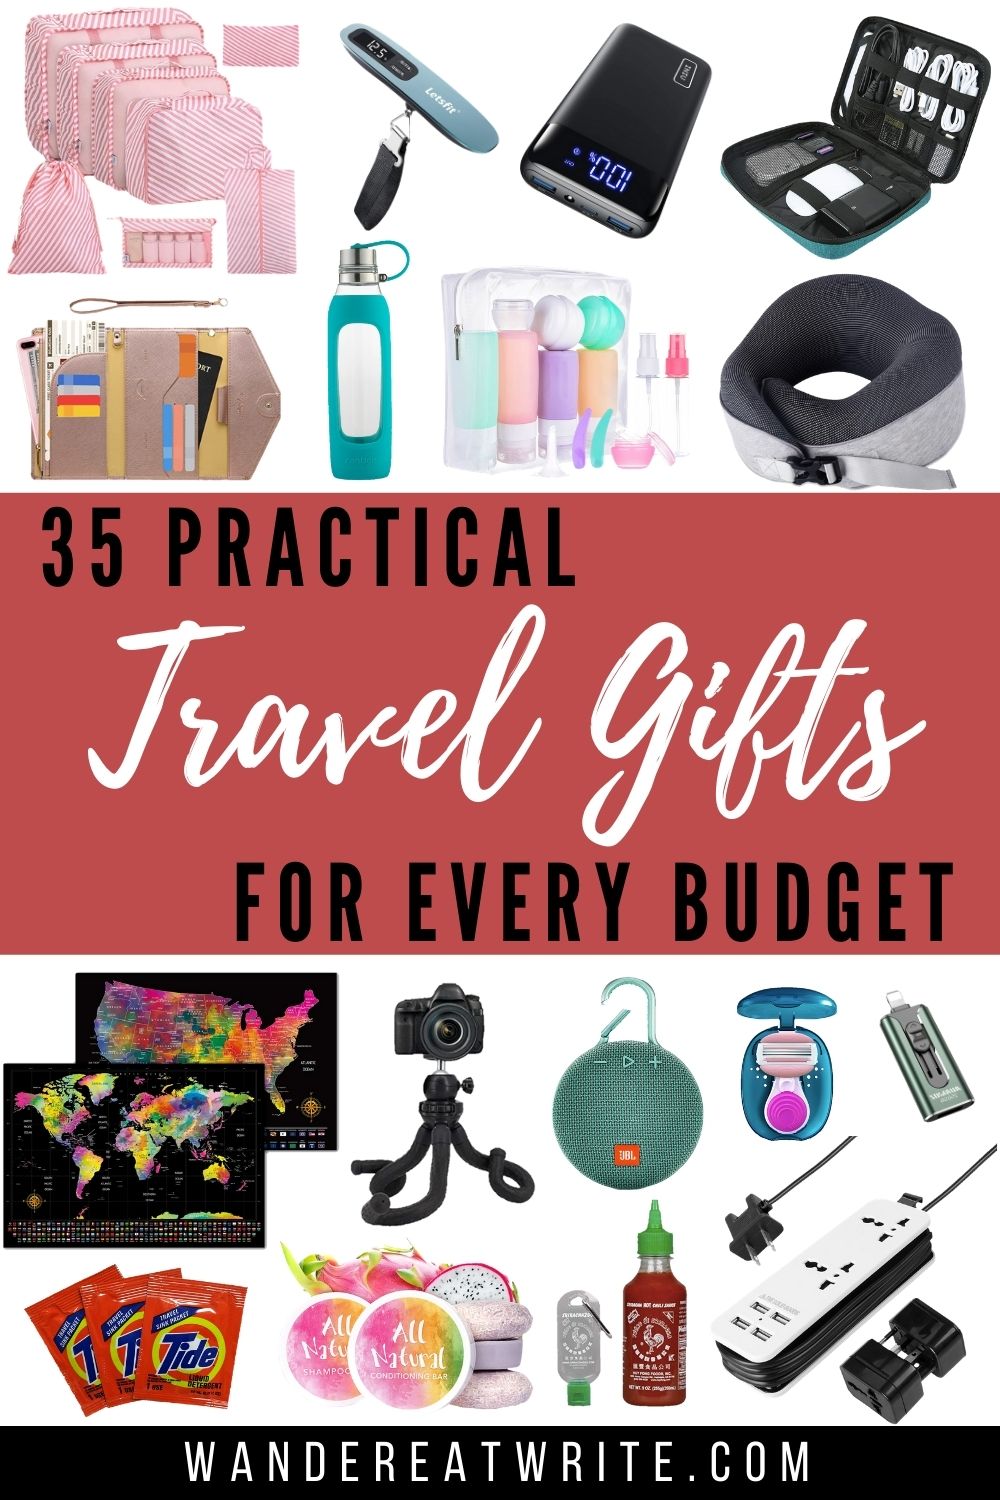 https://wandereatwrite.com/usheeche/2020/11/35-practical-travel-gifts-for-every-budget.jpg